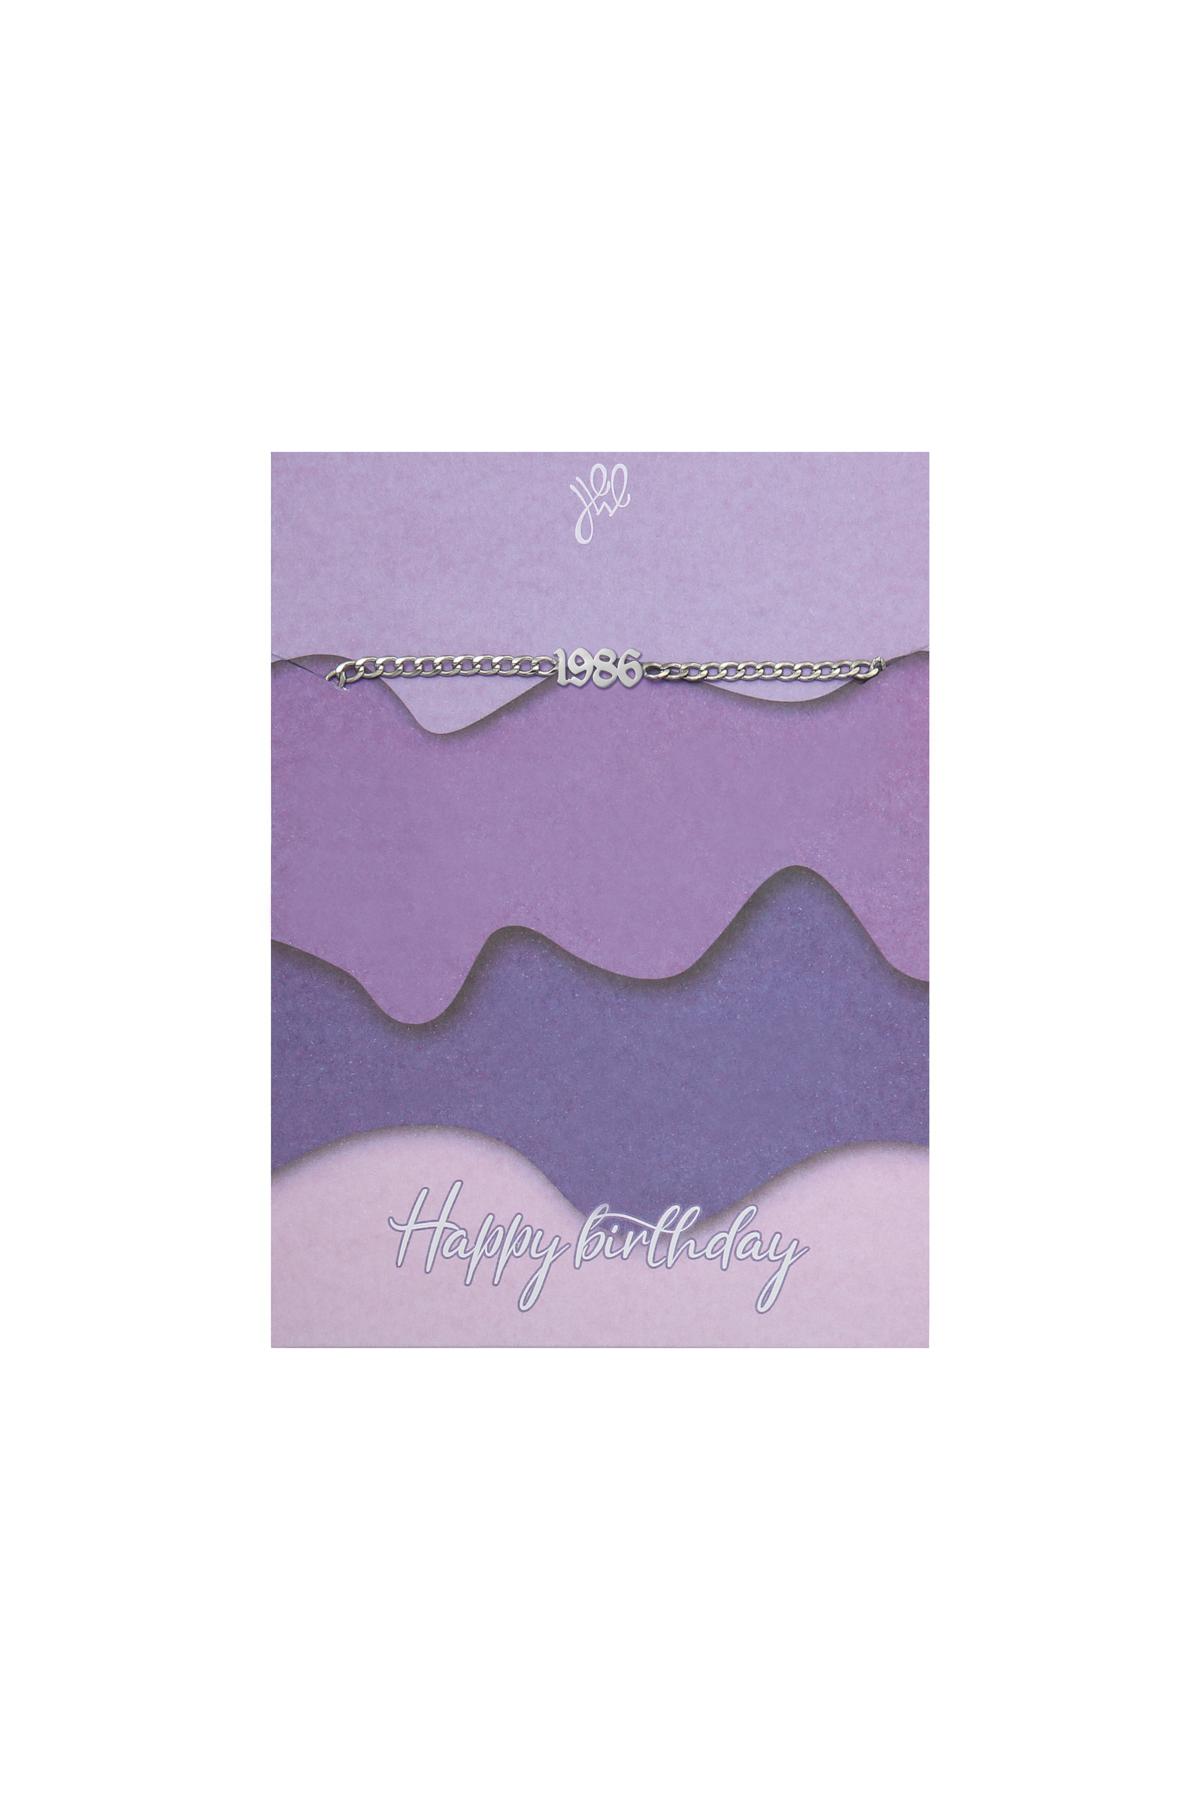 Bracelet Happy Birthday Years - 1986 Argenté Acier inoxydable